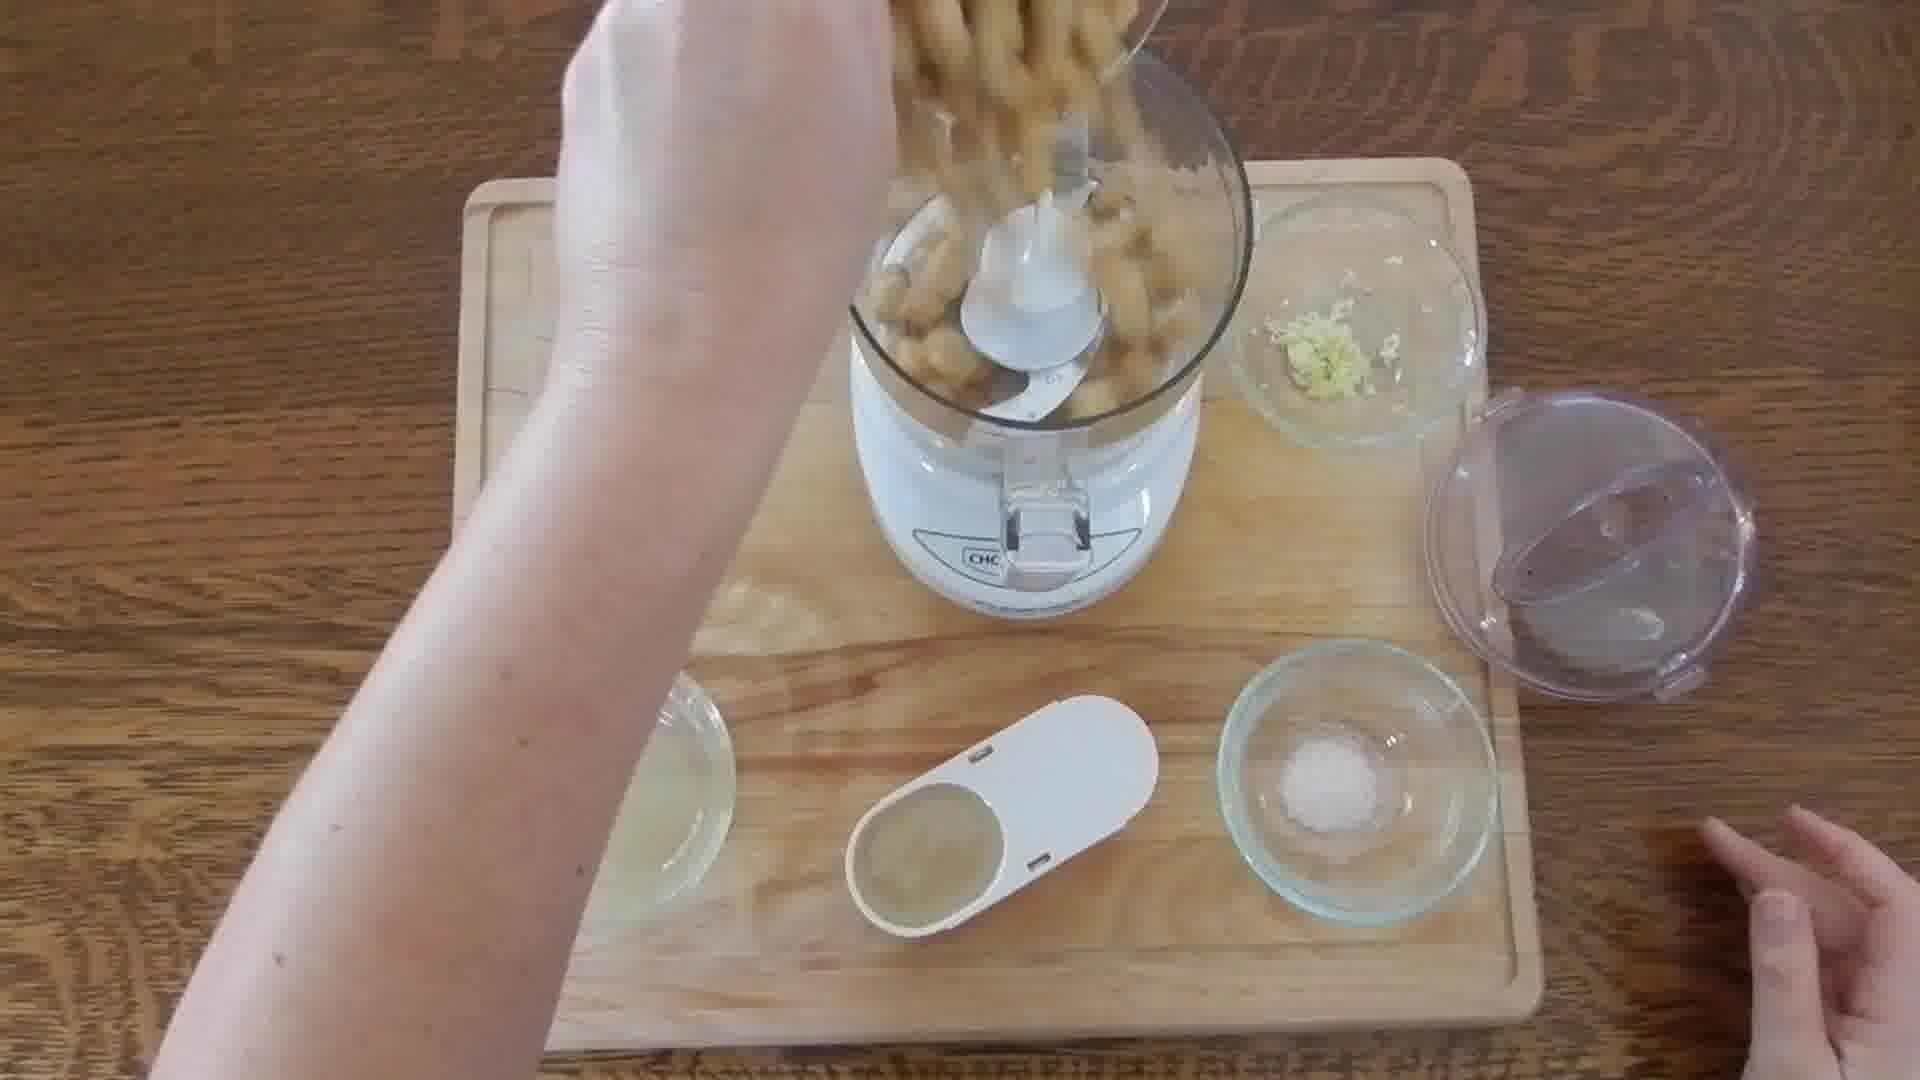  homemade hummus